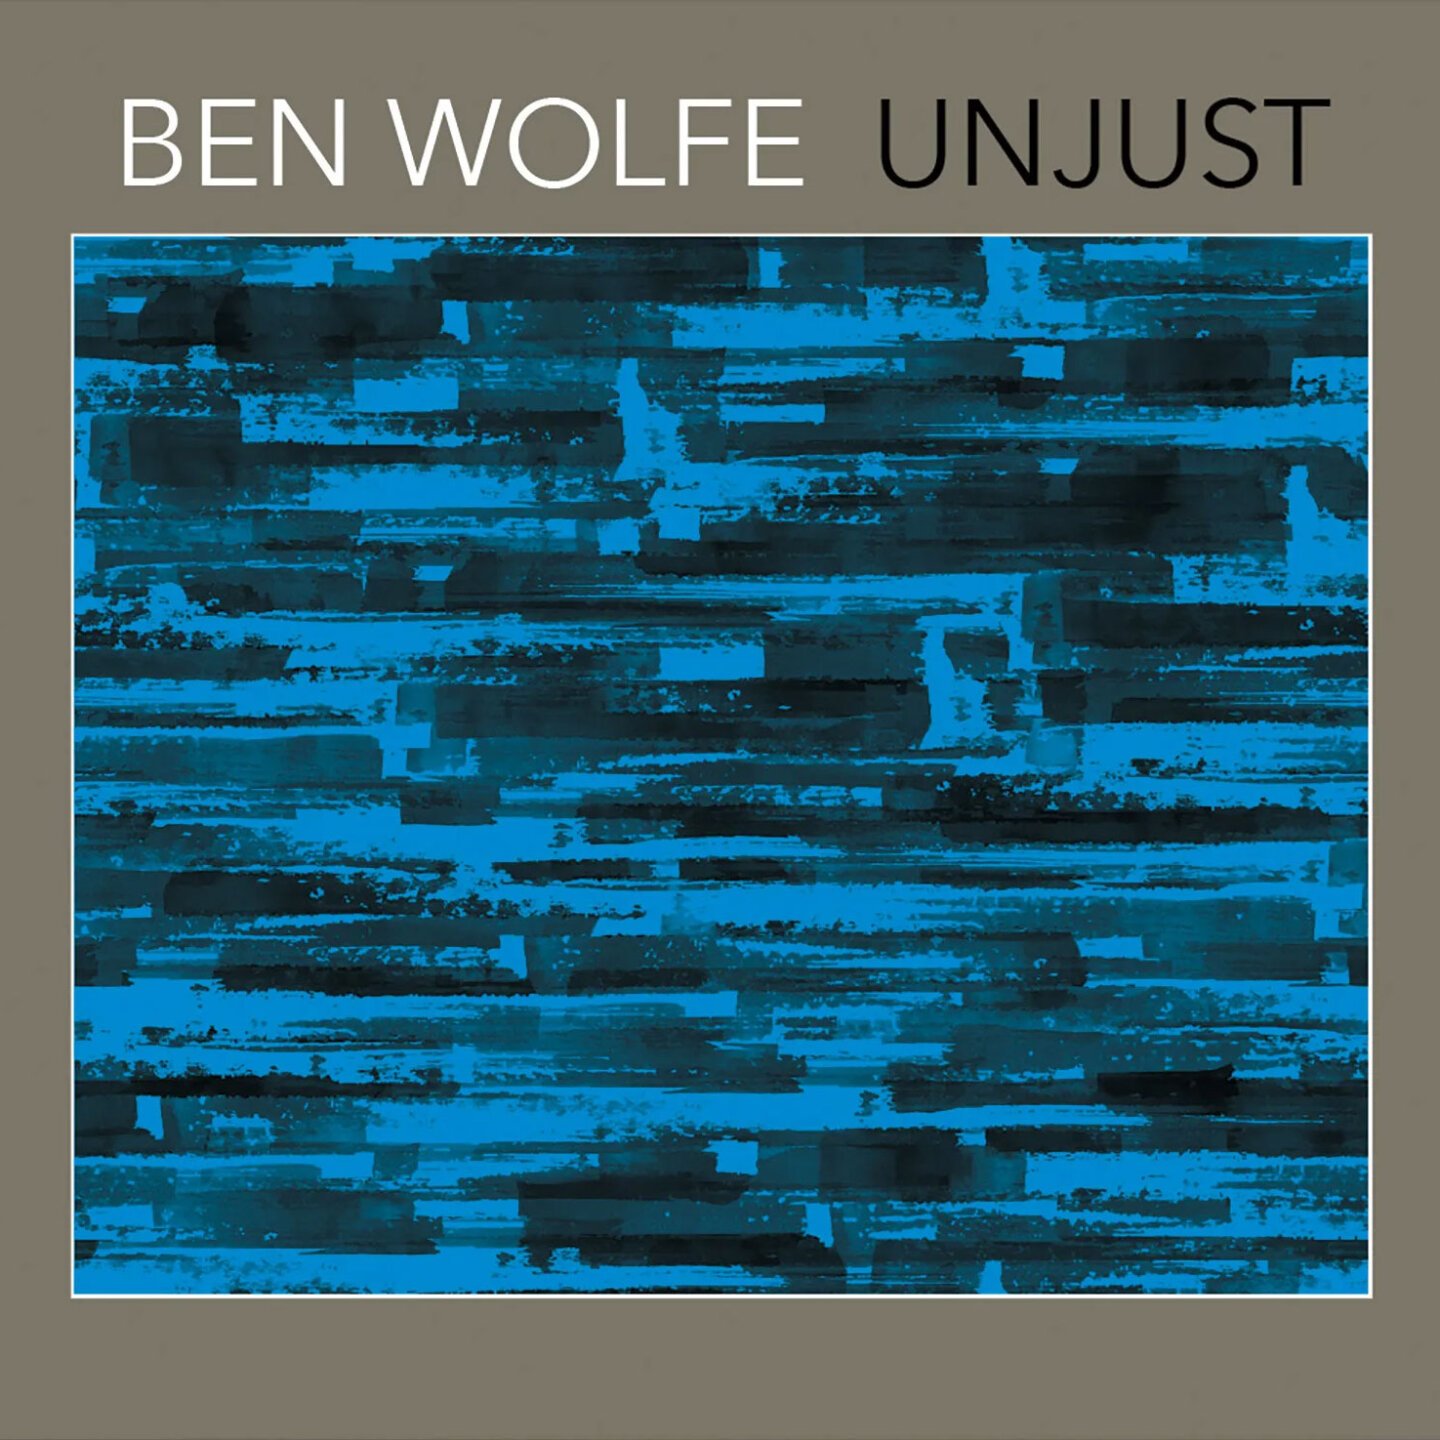 Ben Wolfe Unjust cover rip.jpeg